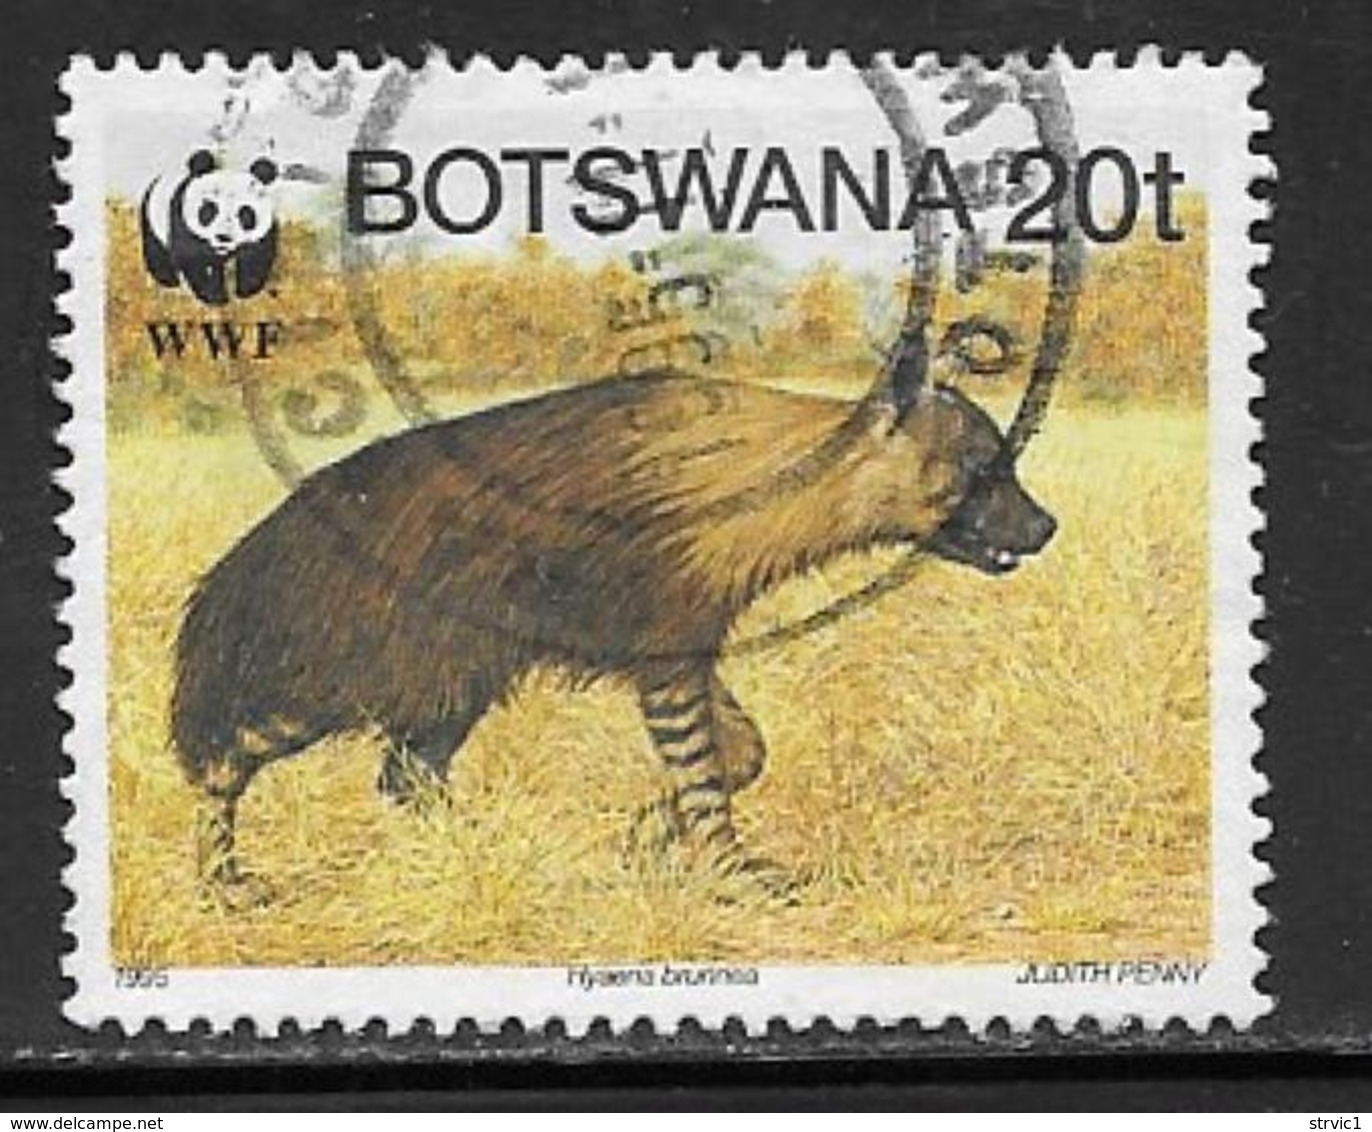 Botswana Scott # 586a Used Hyaena, 1995 - Botswana (1966-...)